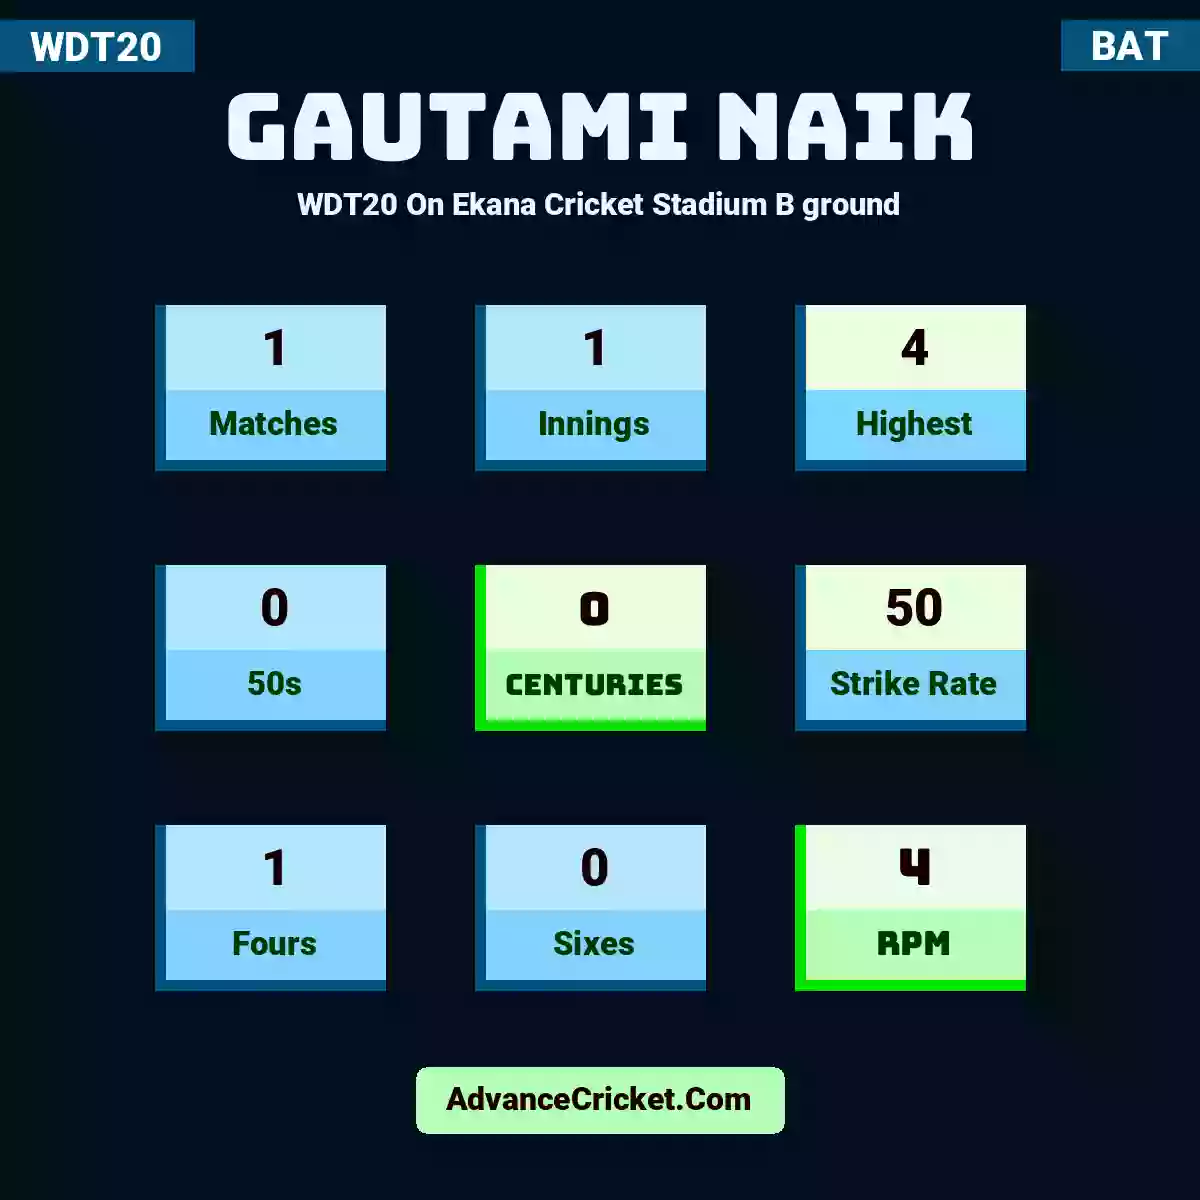 Gautami Naik WDT20  On Ekana Cricket Stadium B ground, Gautami Naik played 1 matches, scored 4 runs as highest, 0 half-centuries, and 0 centuries, with a strike rate of 50. G.Naik hit 1 fours and 0 sixes, with an RPM of 4.